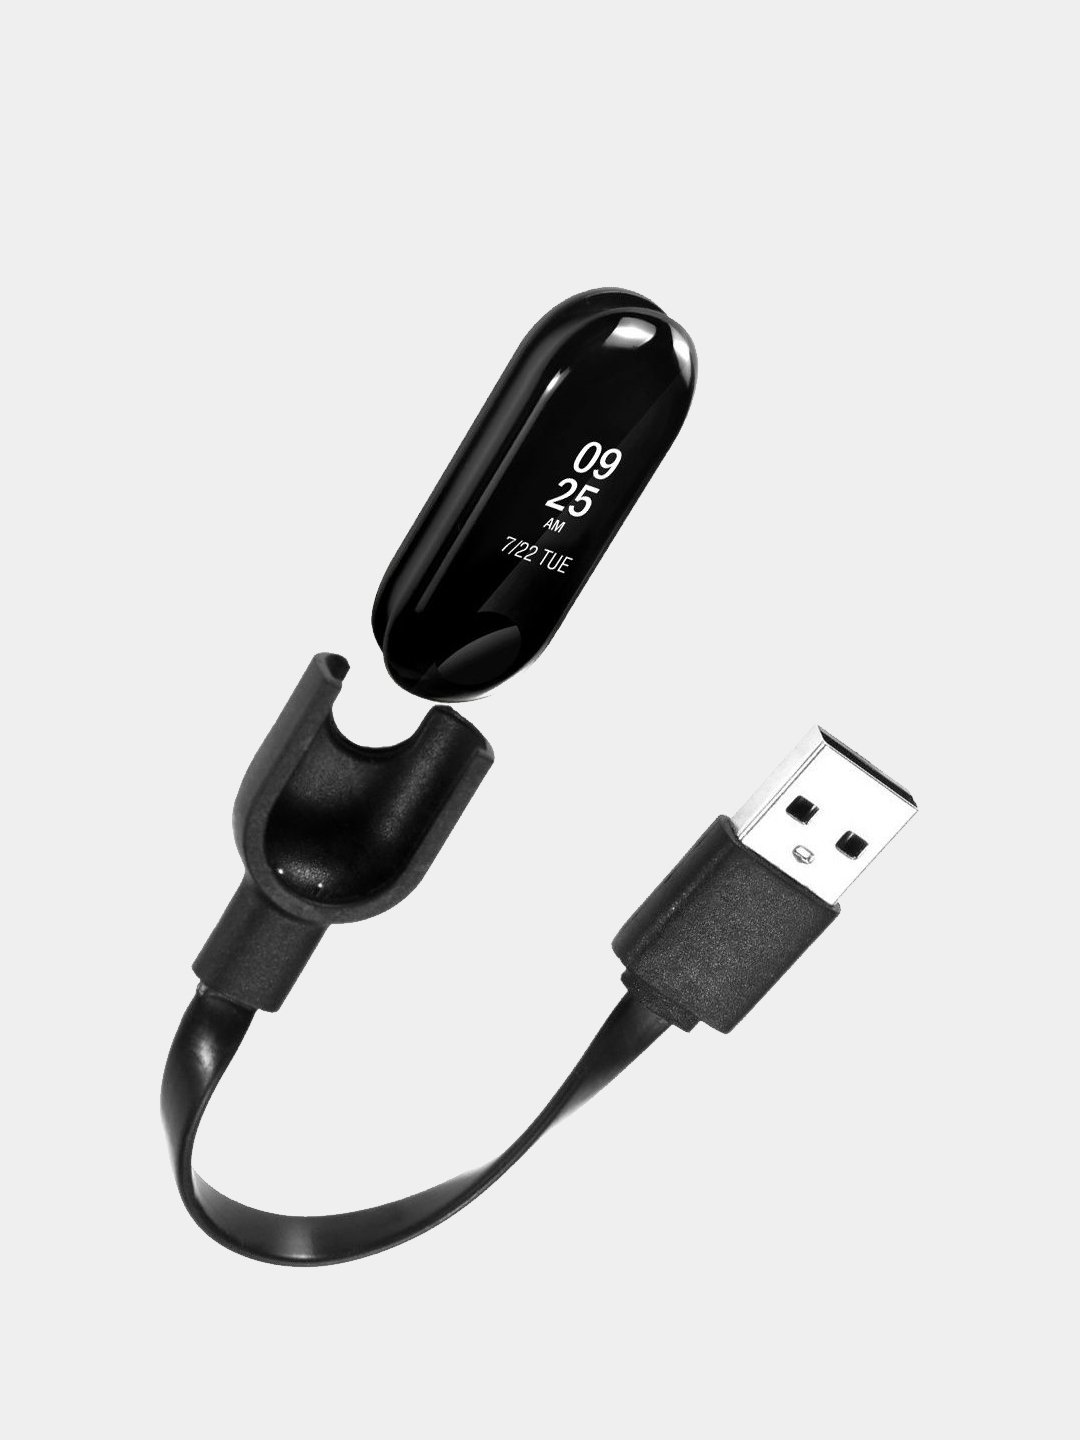 Зарядка для Xiaomi mi Band 3. USB кабель для Xiaomi mi Band 3. Кабель для зарядки Xiaomi mi Band 3. Сяоми банд 3 зарядка.